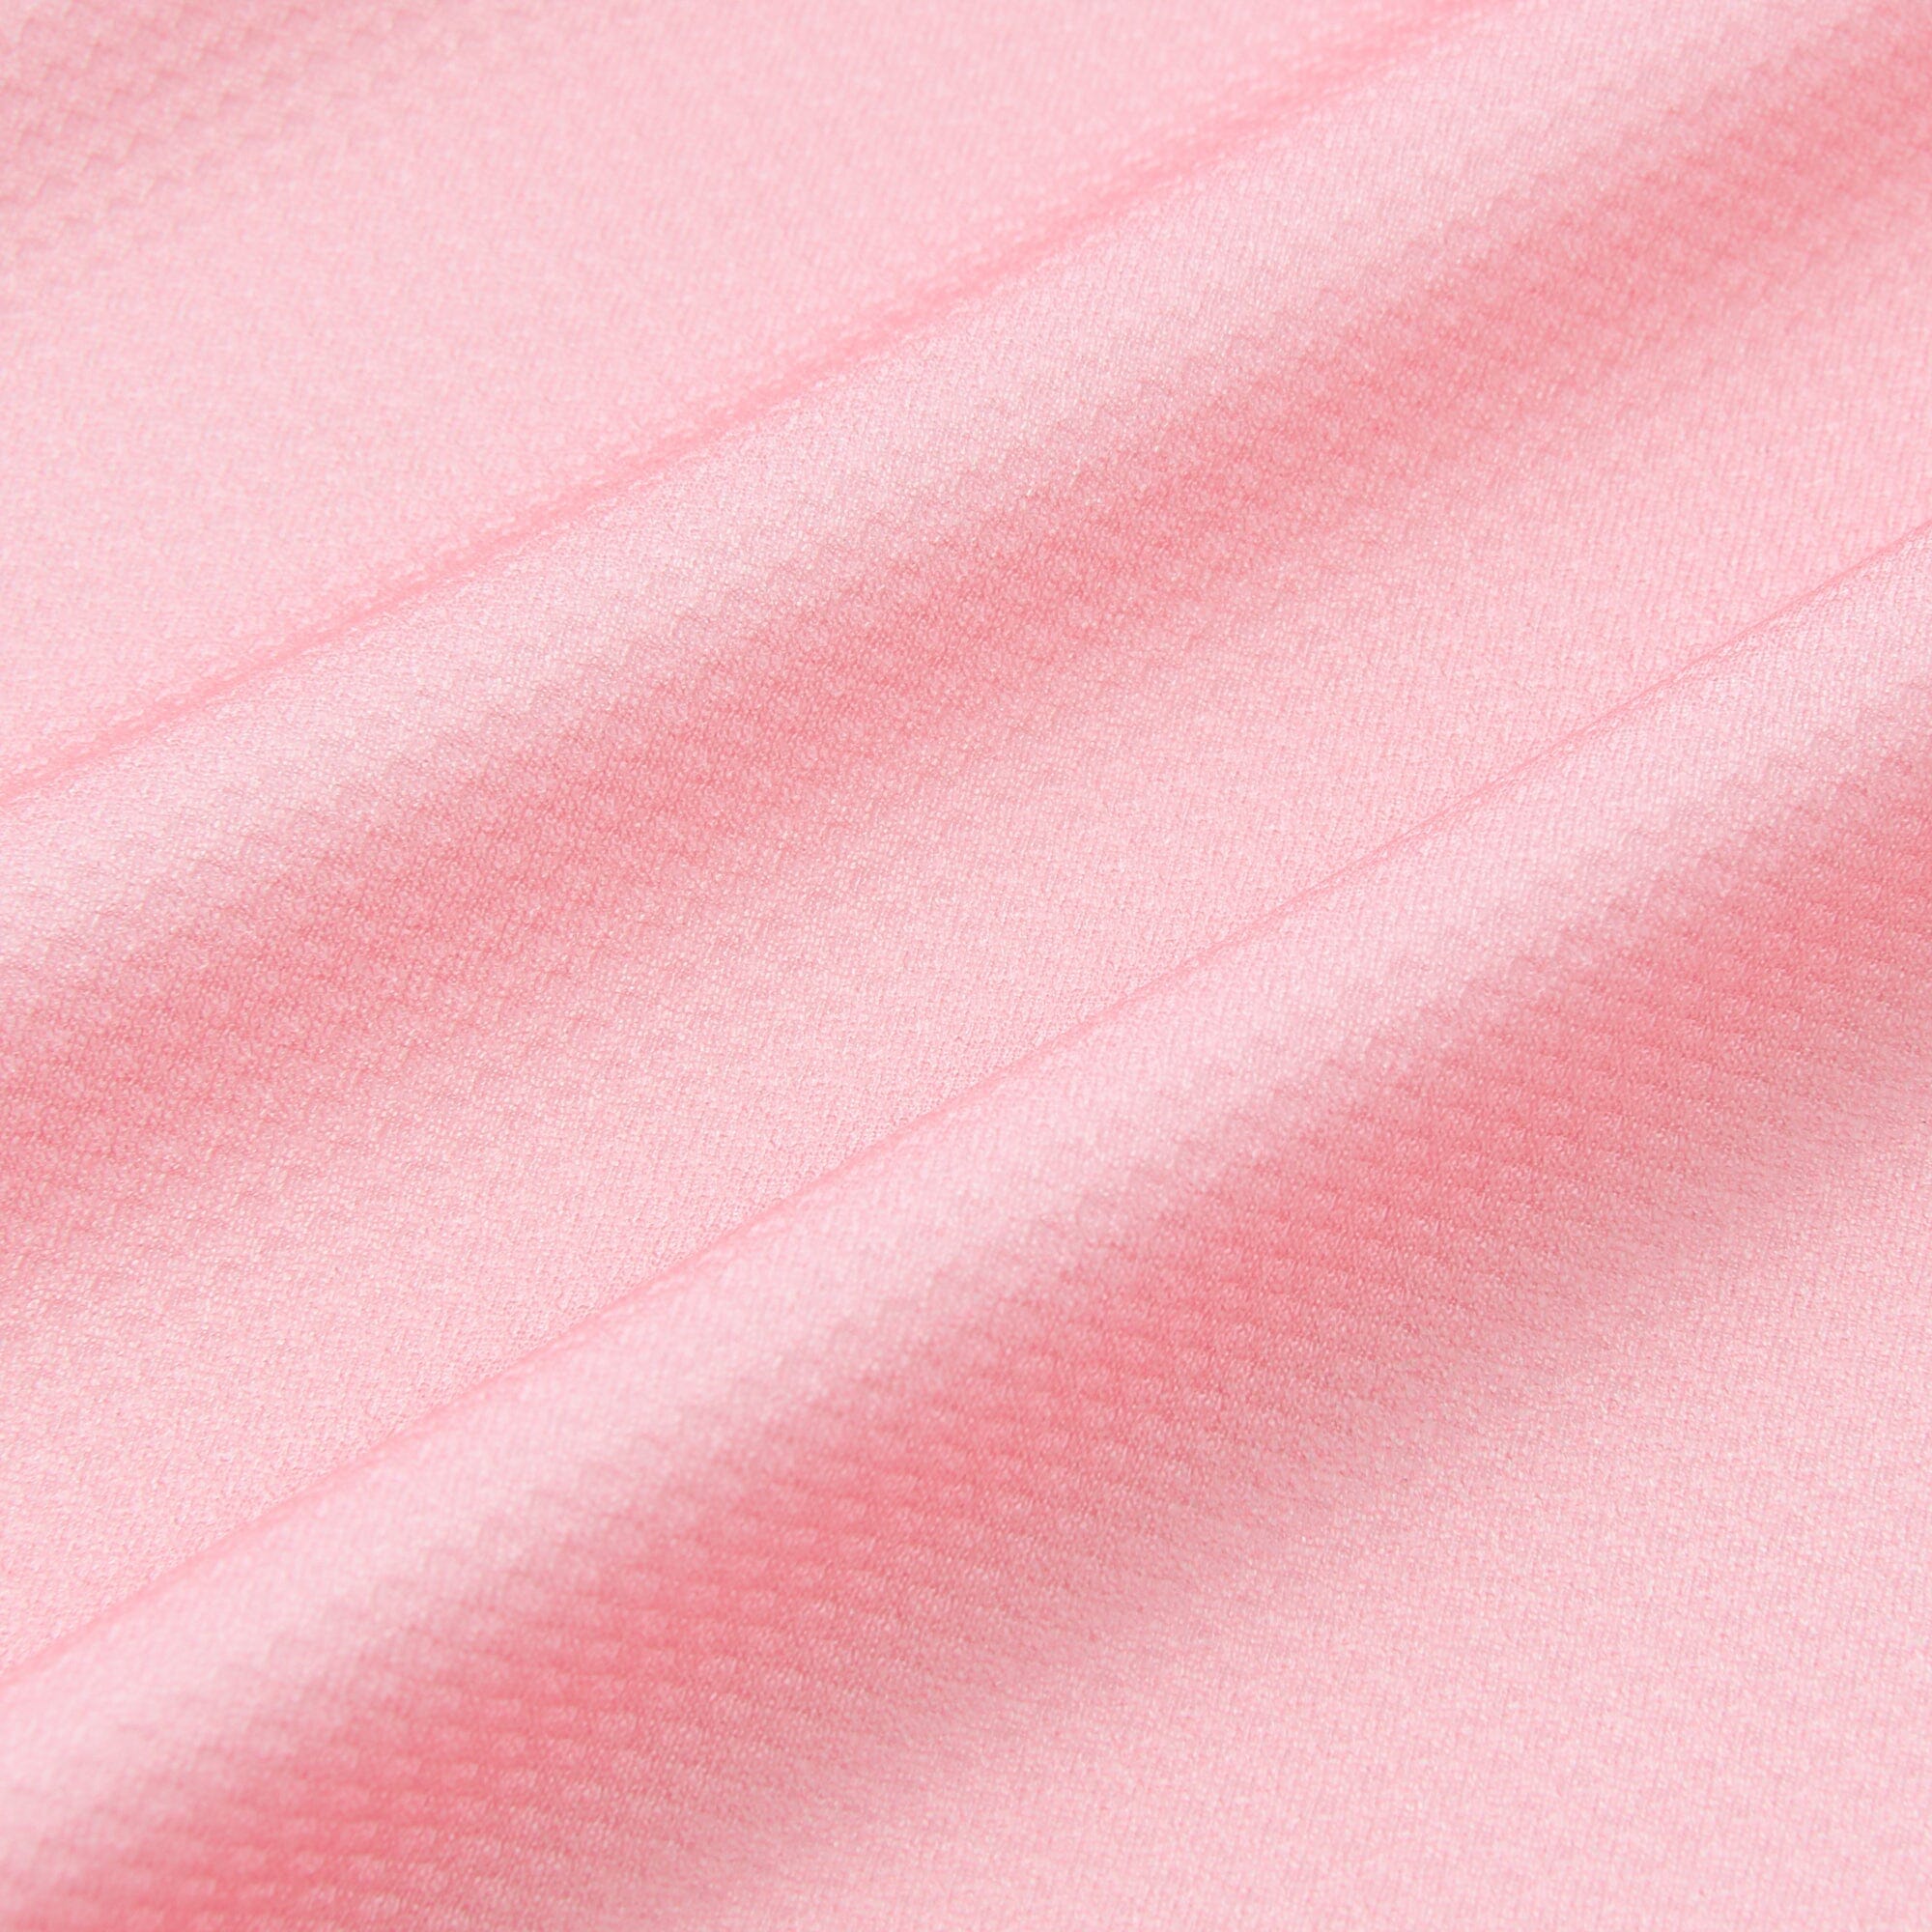 UV COOL 防紫外線涼爽毛巾 小號 粉紅色